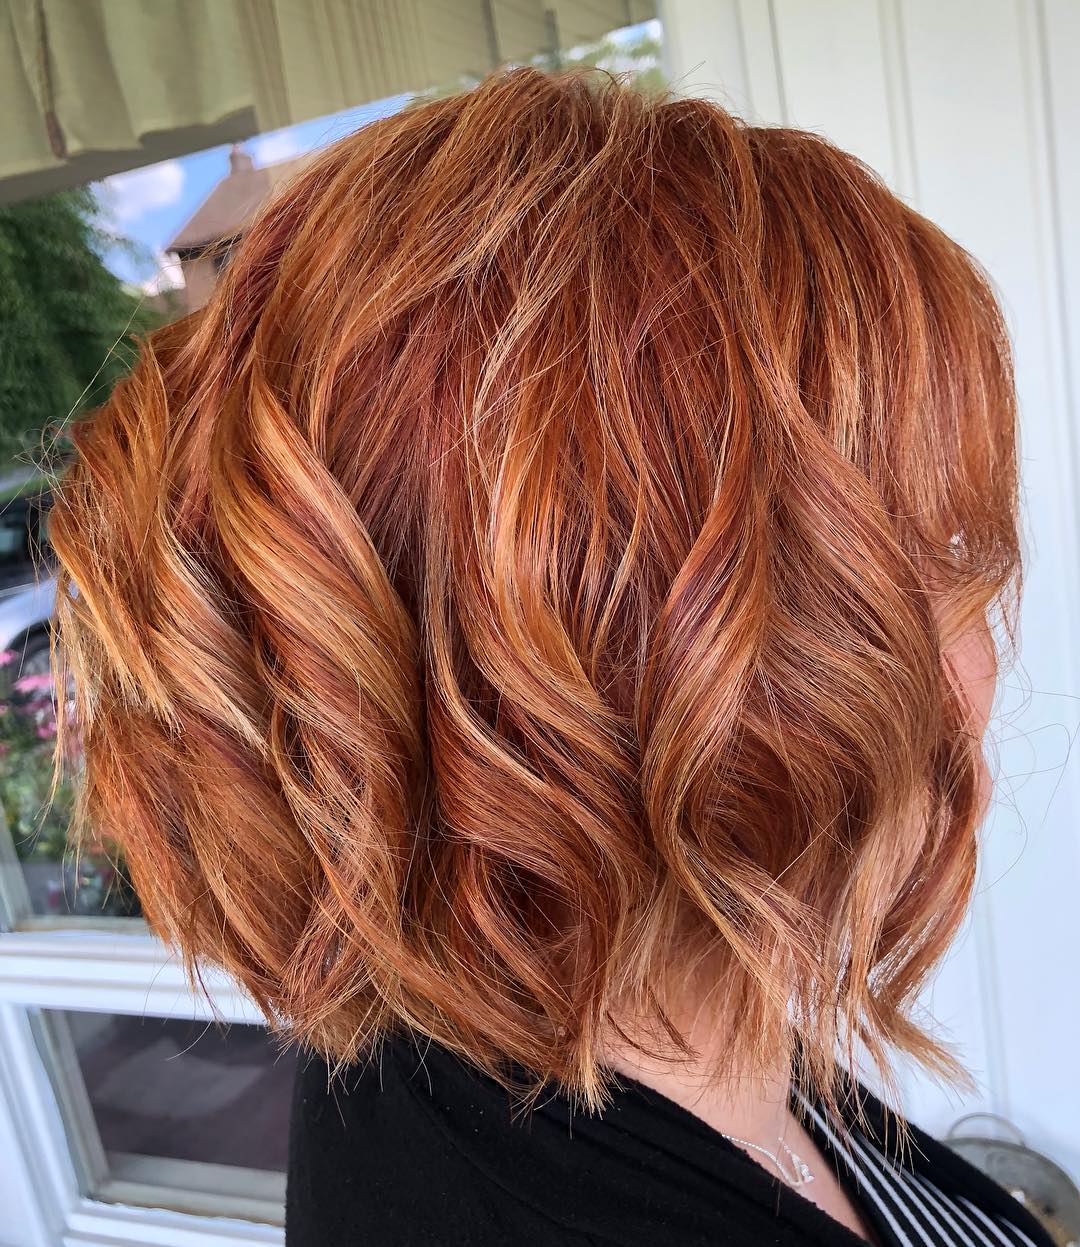 Copper Hair amongst Strawberry Blonde Highlights.